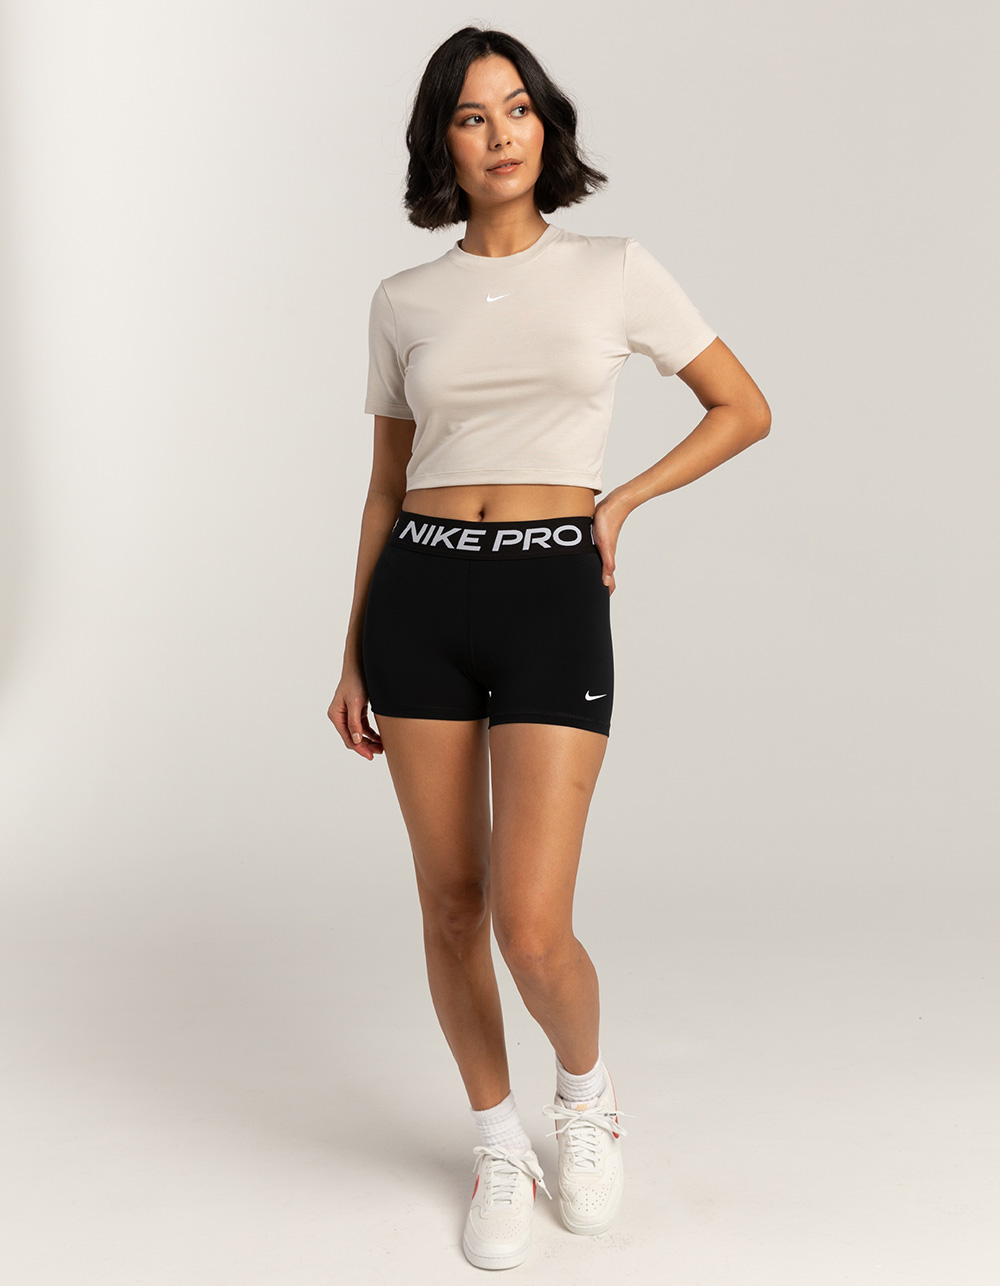 Black Nike Dri Fit Half Tights Track Running Compression Shorts Women’s  Small S